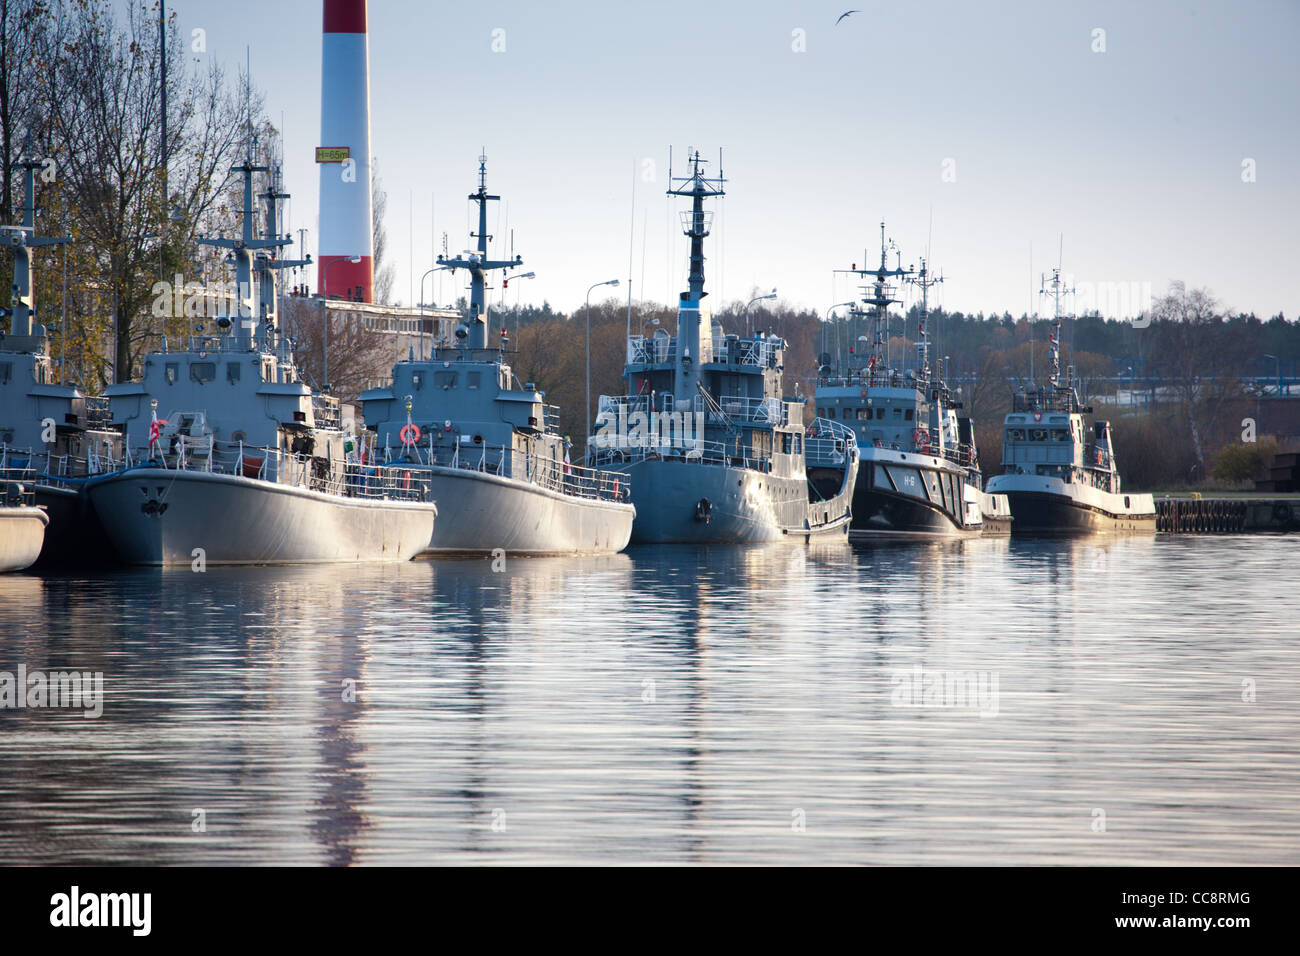 Military port on the river Swine in Swinoujscie, Poland. Stock Photo